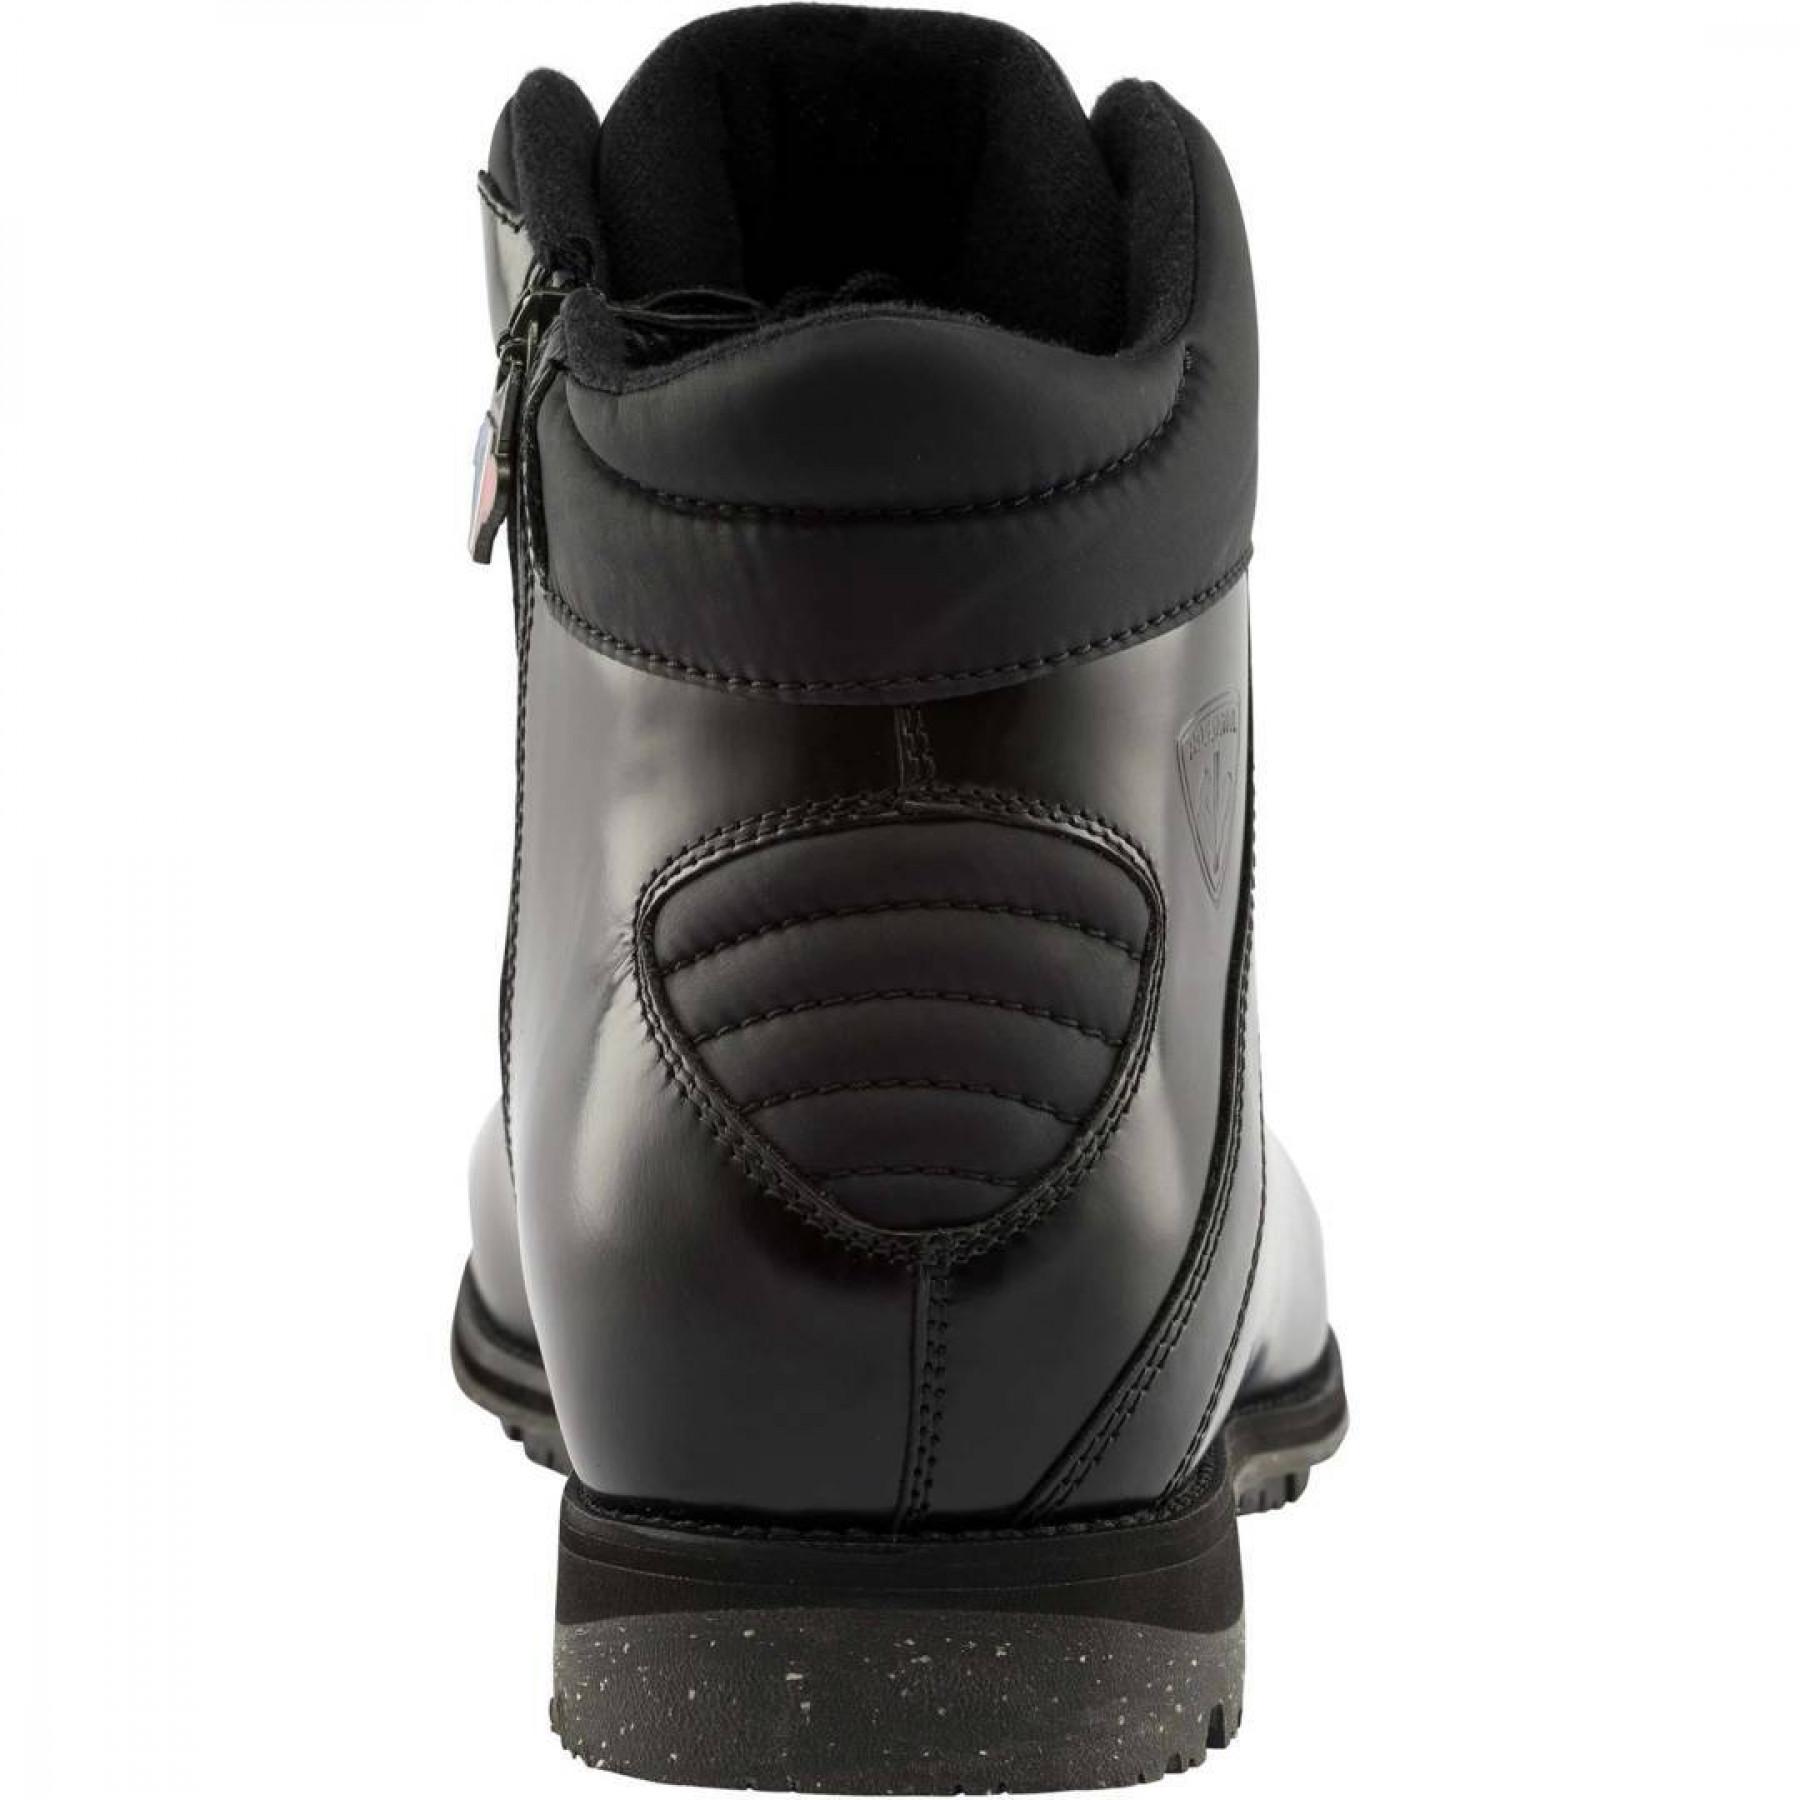 Winter boots Rossignol 1907 Chamonix Black Edition